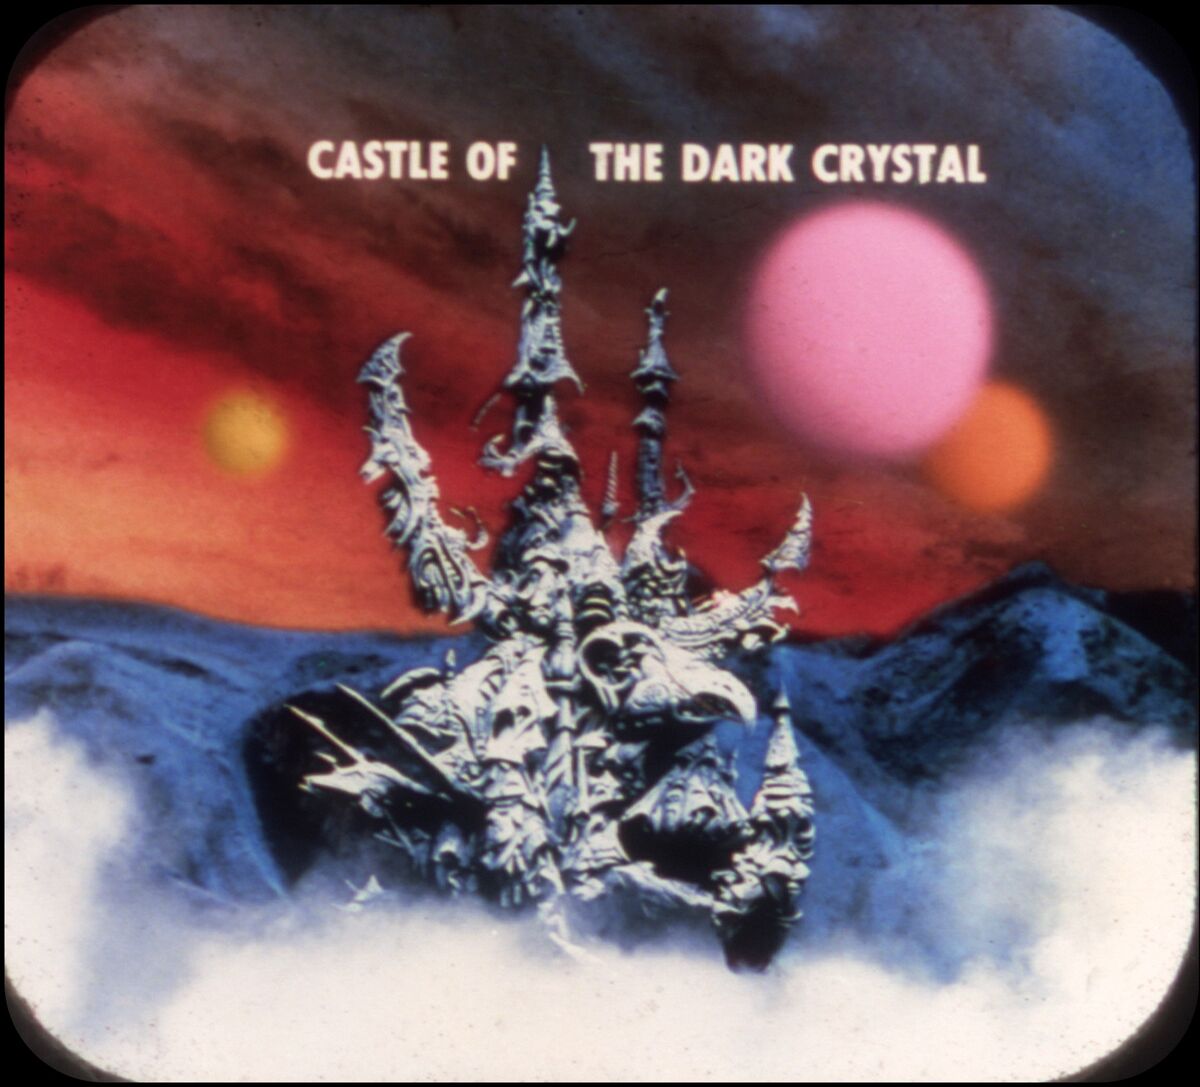 The Dark Crystal View-Master reels, Muppet Wiki